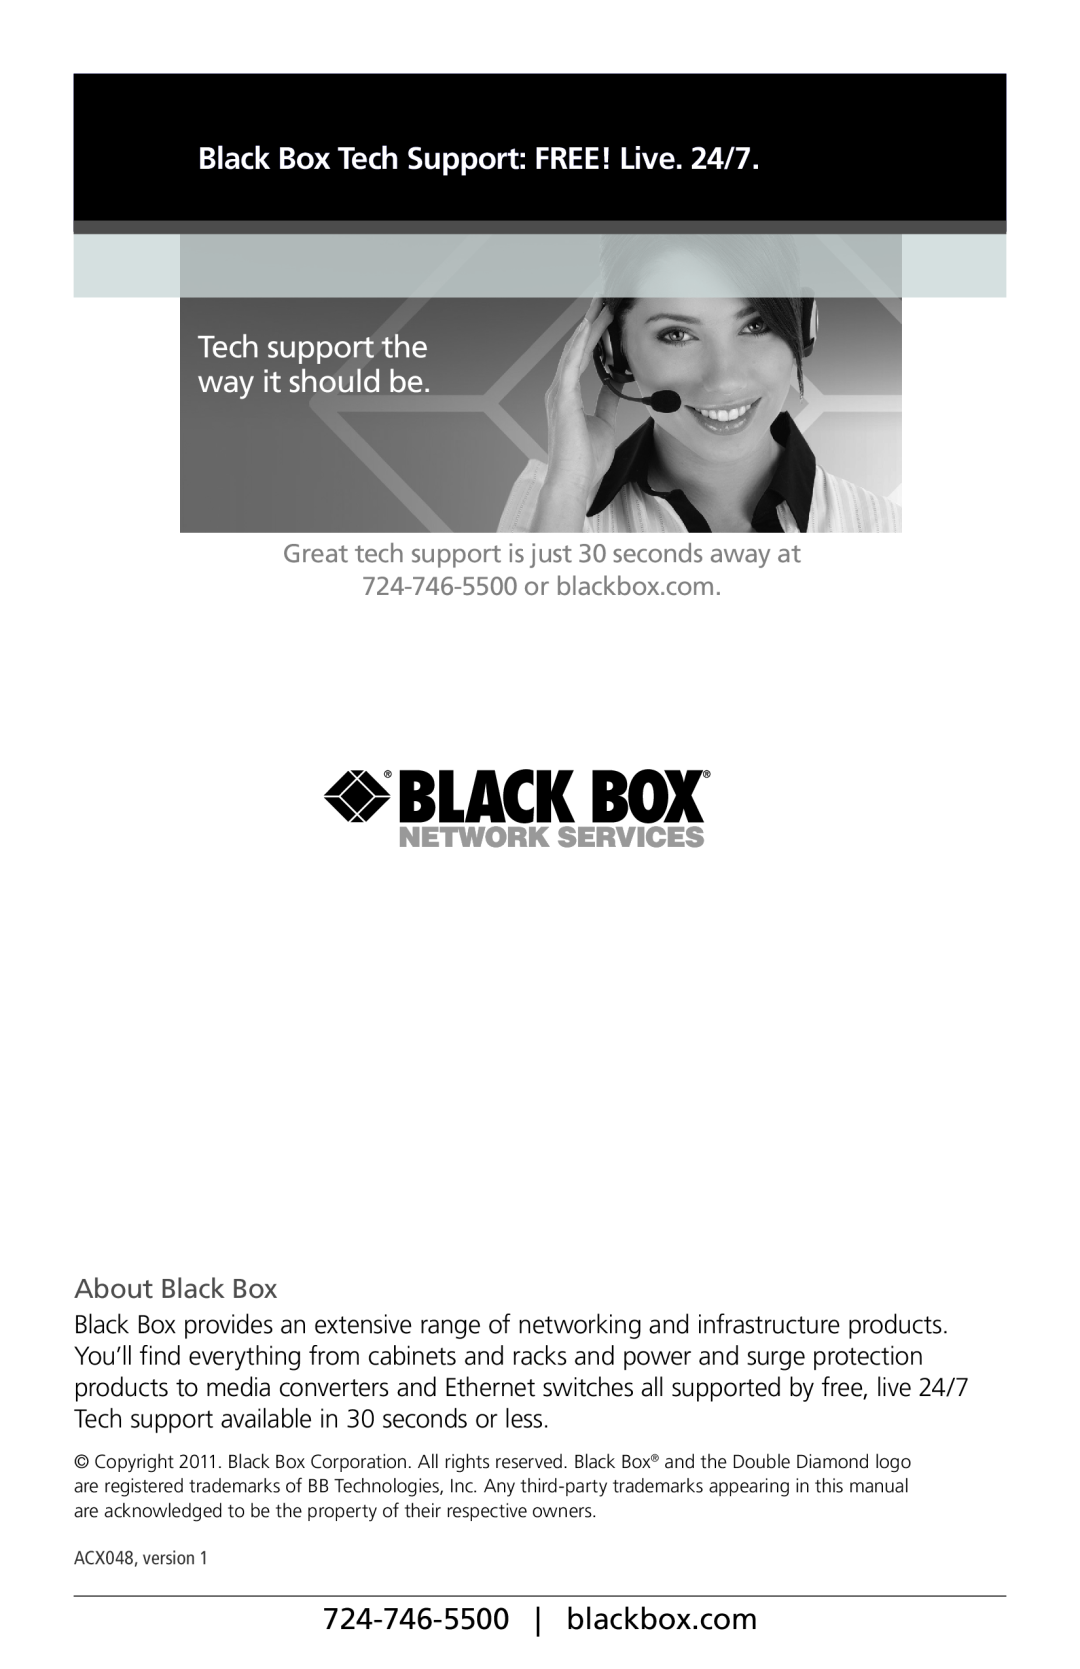 Black Box ACXSFPS, ACXIO8-C Tech support the way it should be, About Black Box, Black Box Tech Support: FREE! Live. 24/7 